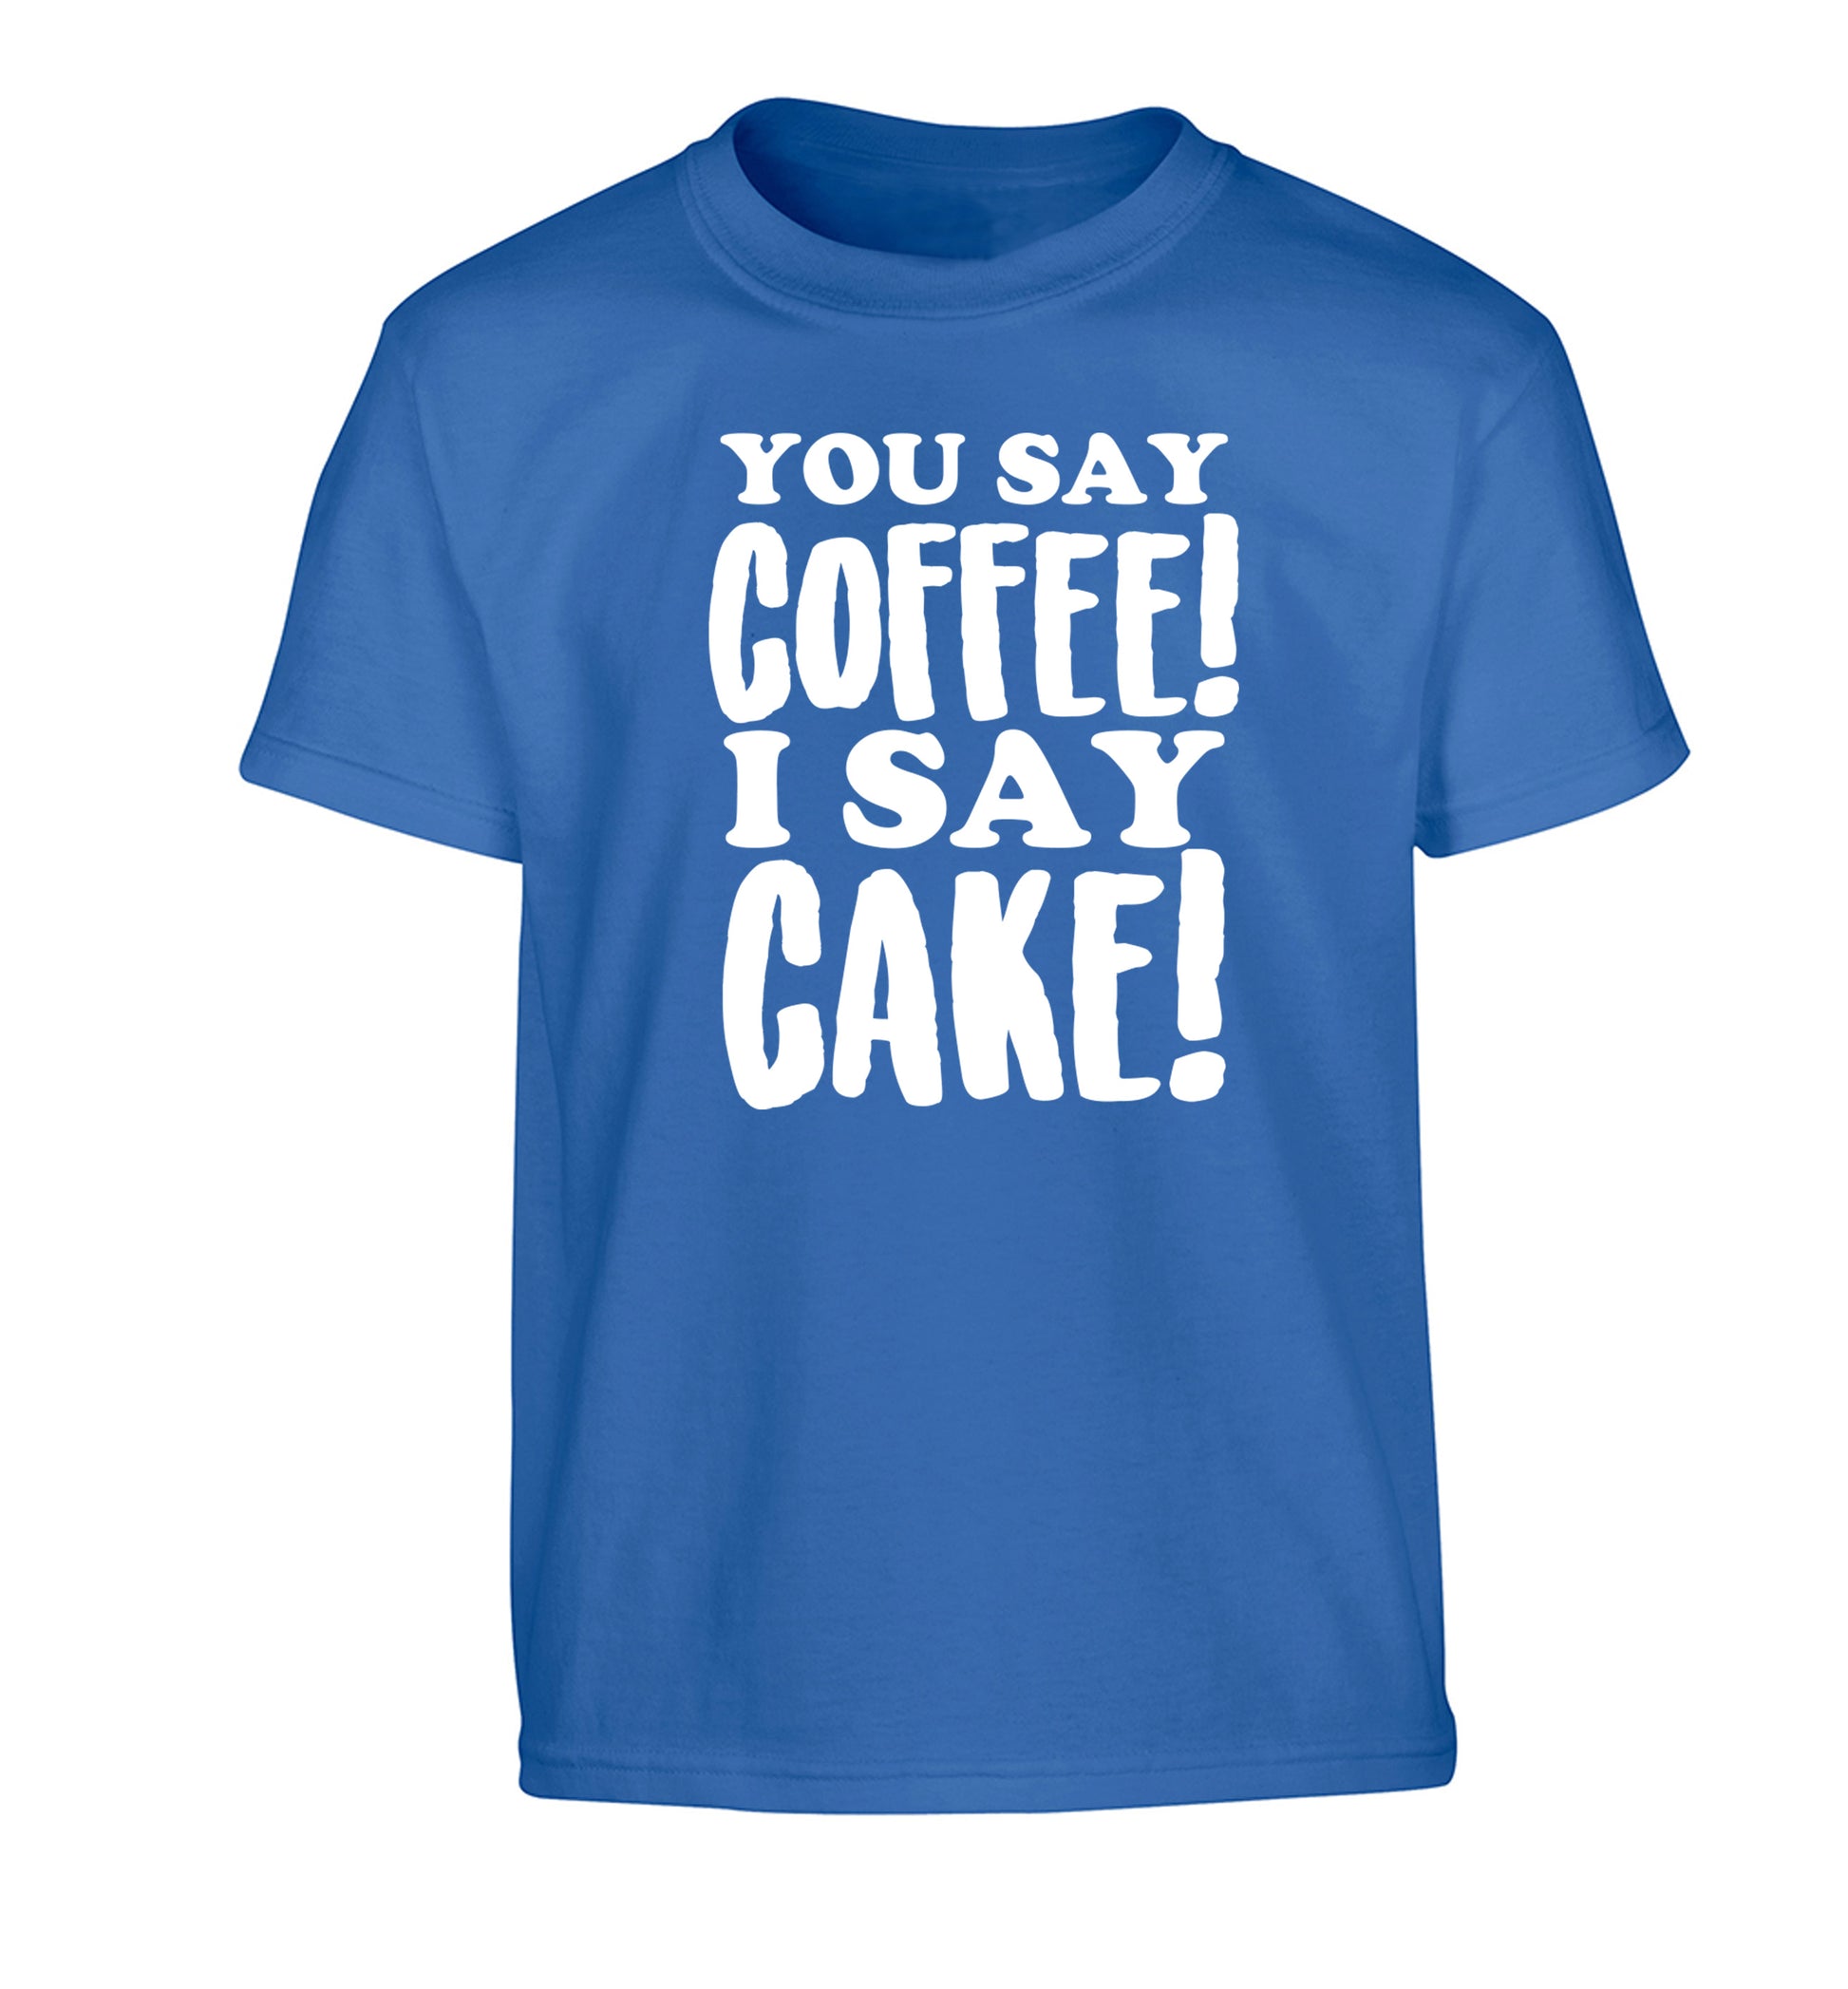 You say coffee I say cake! Children's blue Tshirt 12-14 Years